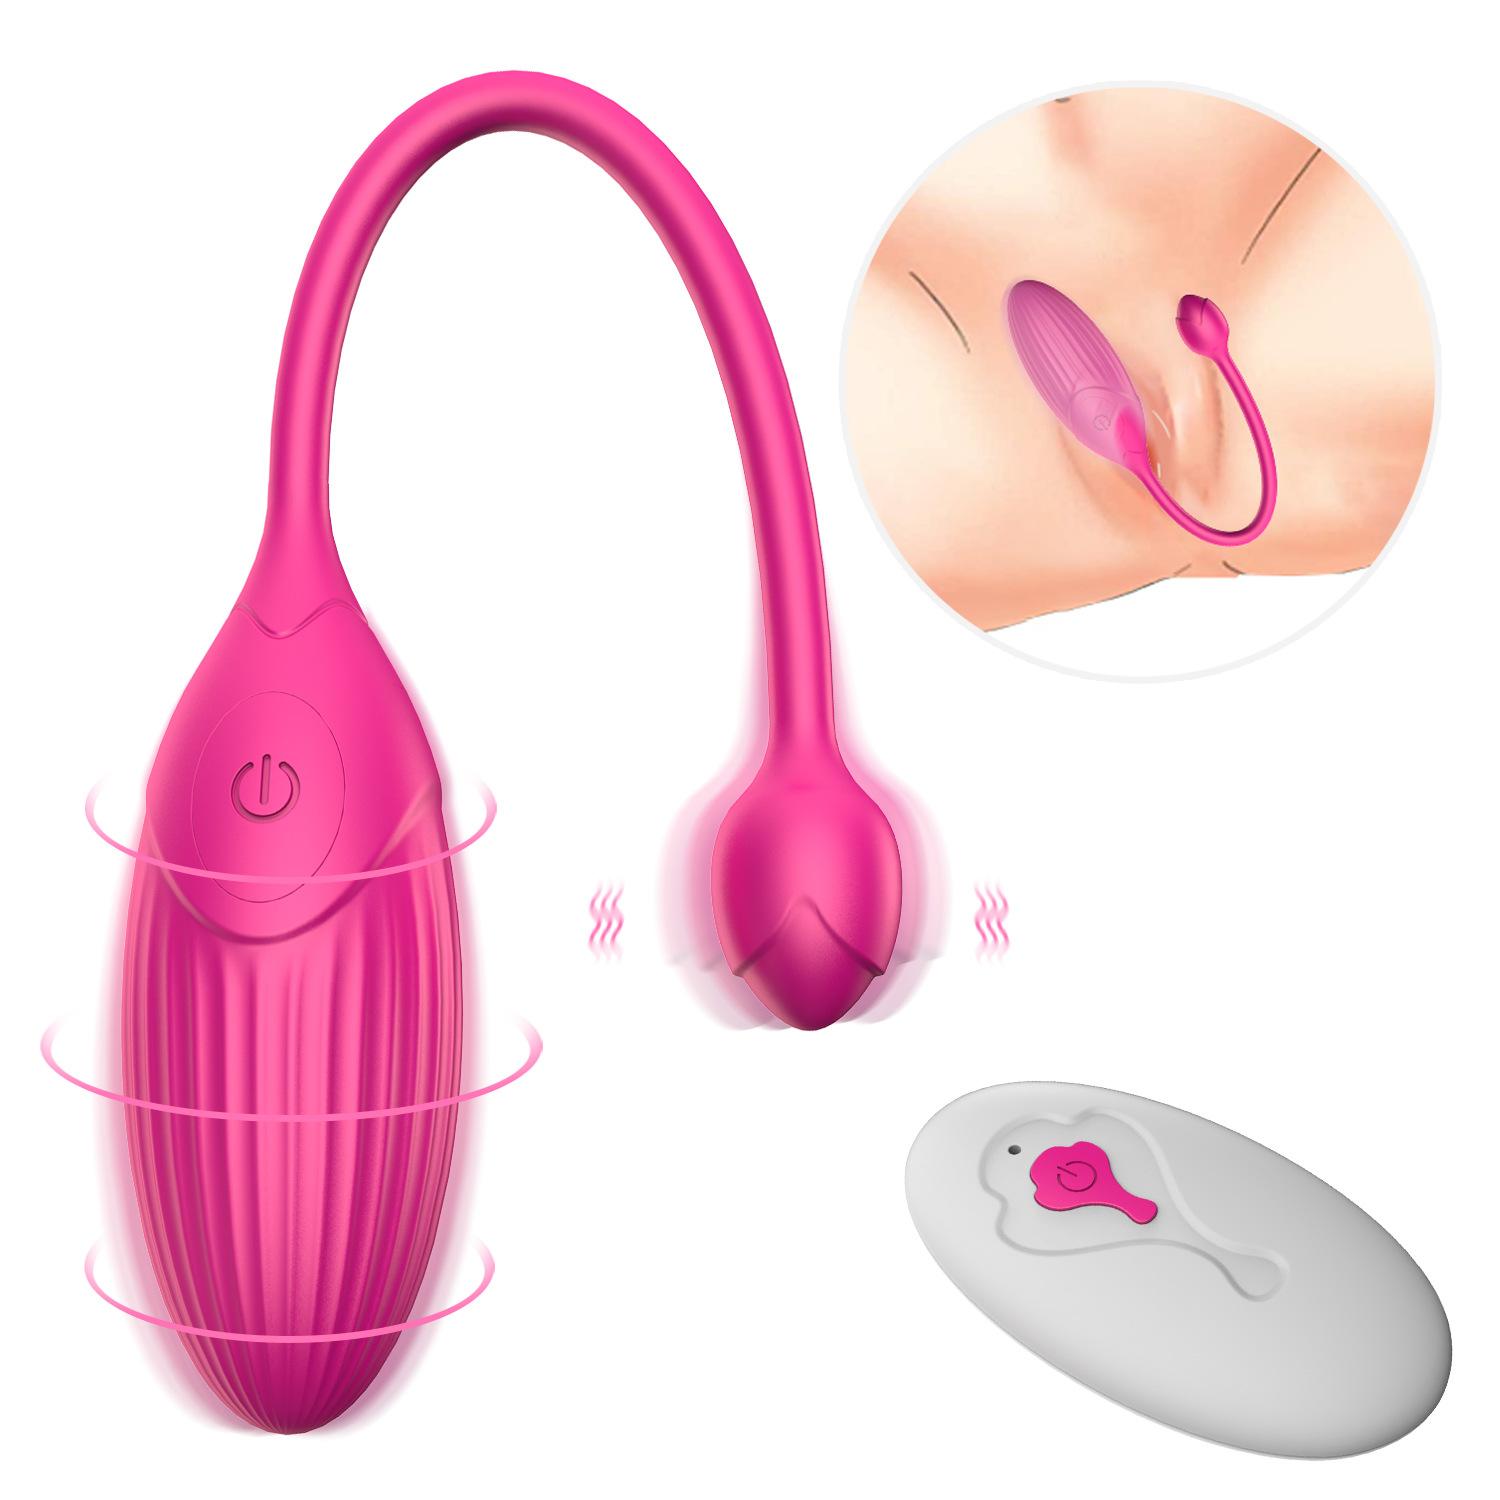  Silicone Adult Woman Female Vaginal Massage Vaginas Ball Sex Toy Wireless Telecontrol Remote Control Jump Love Egg Vibrator